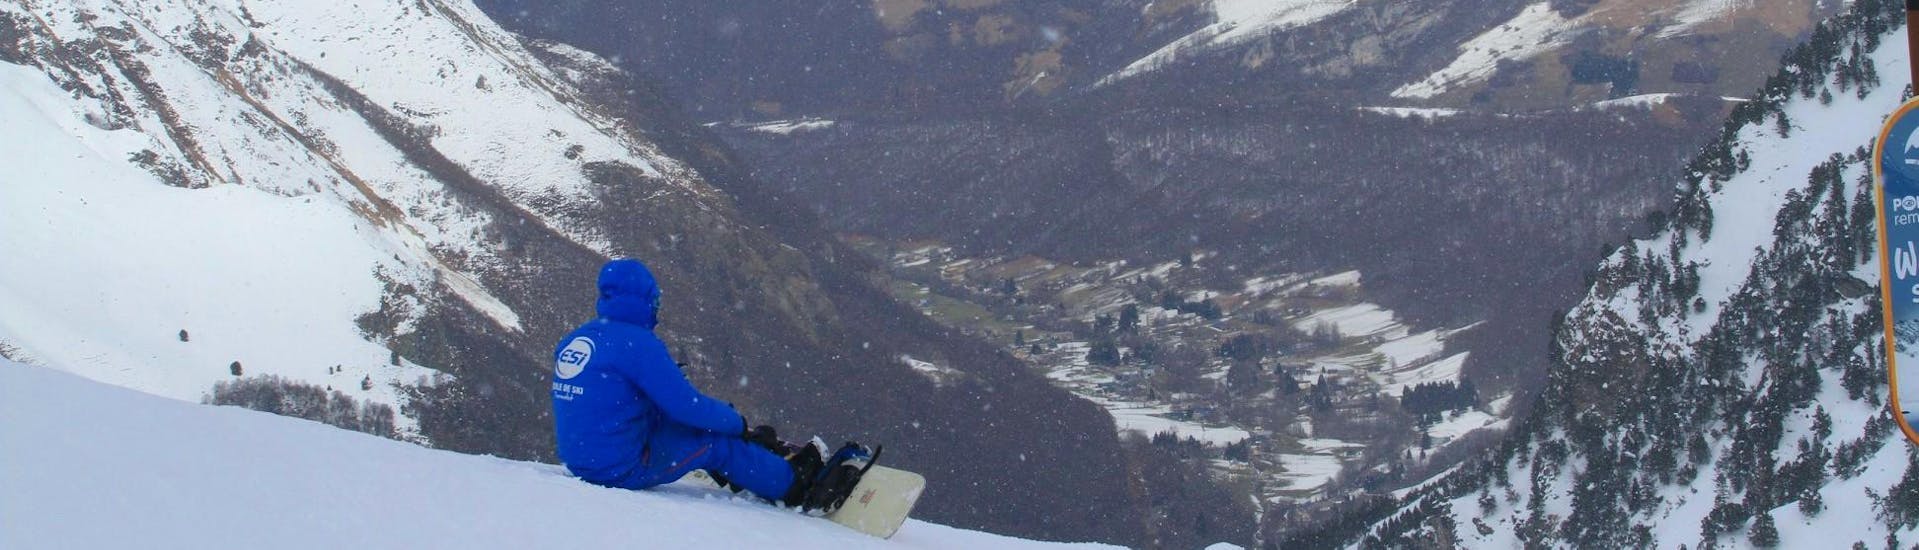 Lezioni di Snowboard a partire da 8 anni per tutti i livelli.